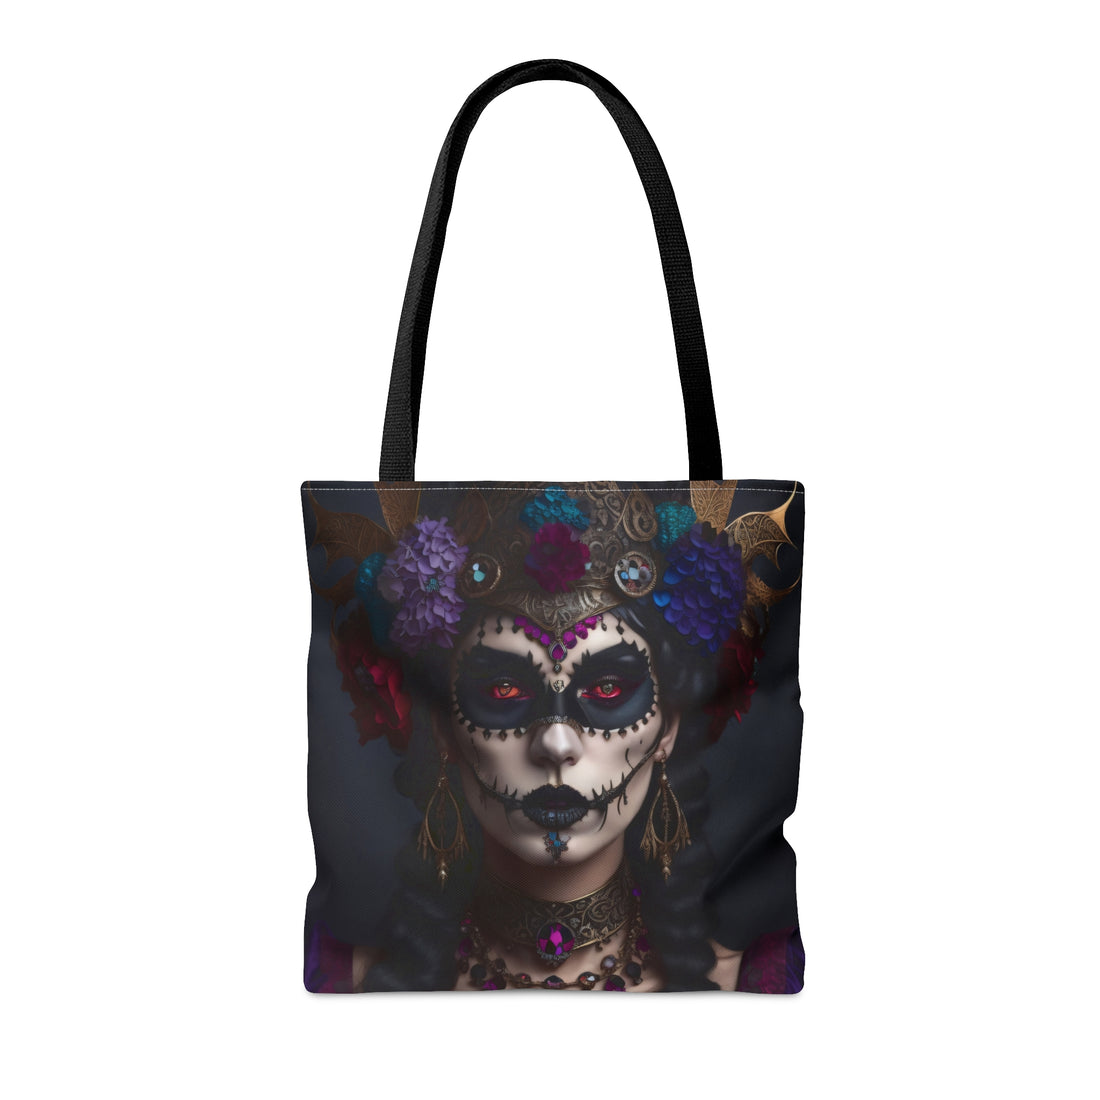 Hibiscus Dia De Las Muerte Gypsy Halloween Trick or Treat Loot Bag